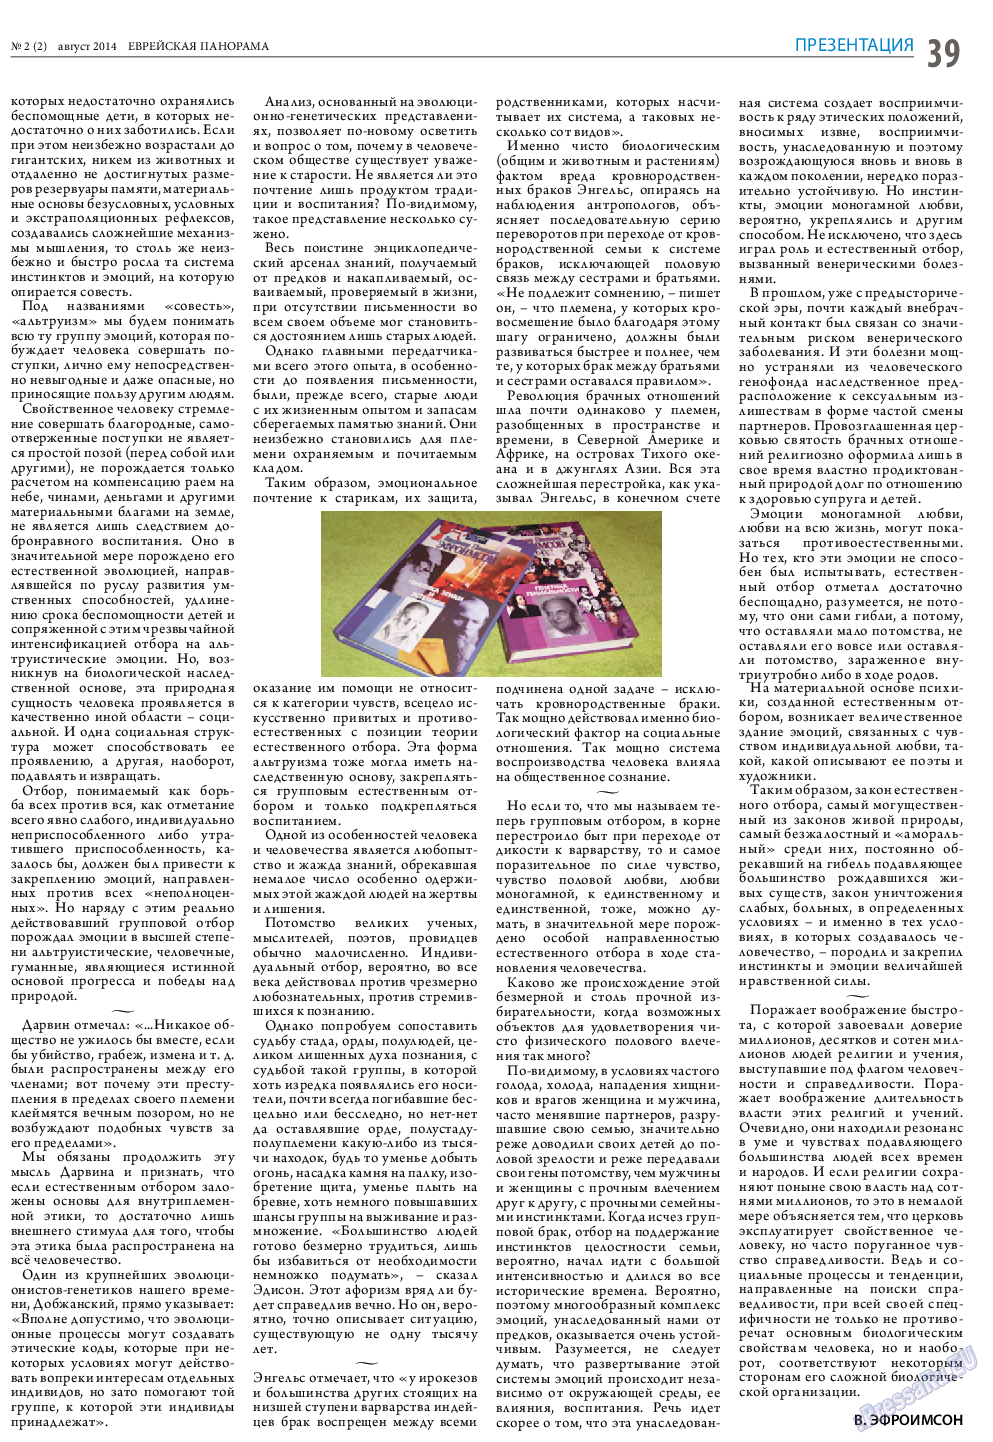 Еврейская панорама, газета. 2014 №2 стр.39